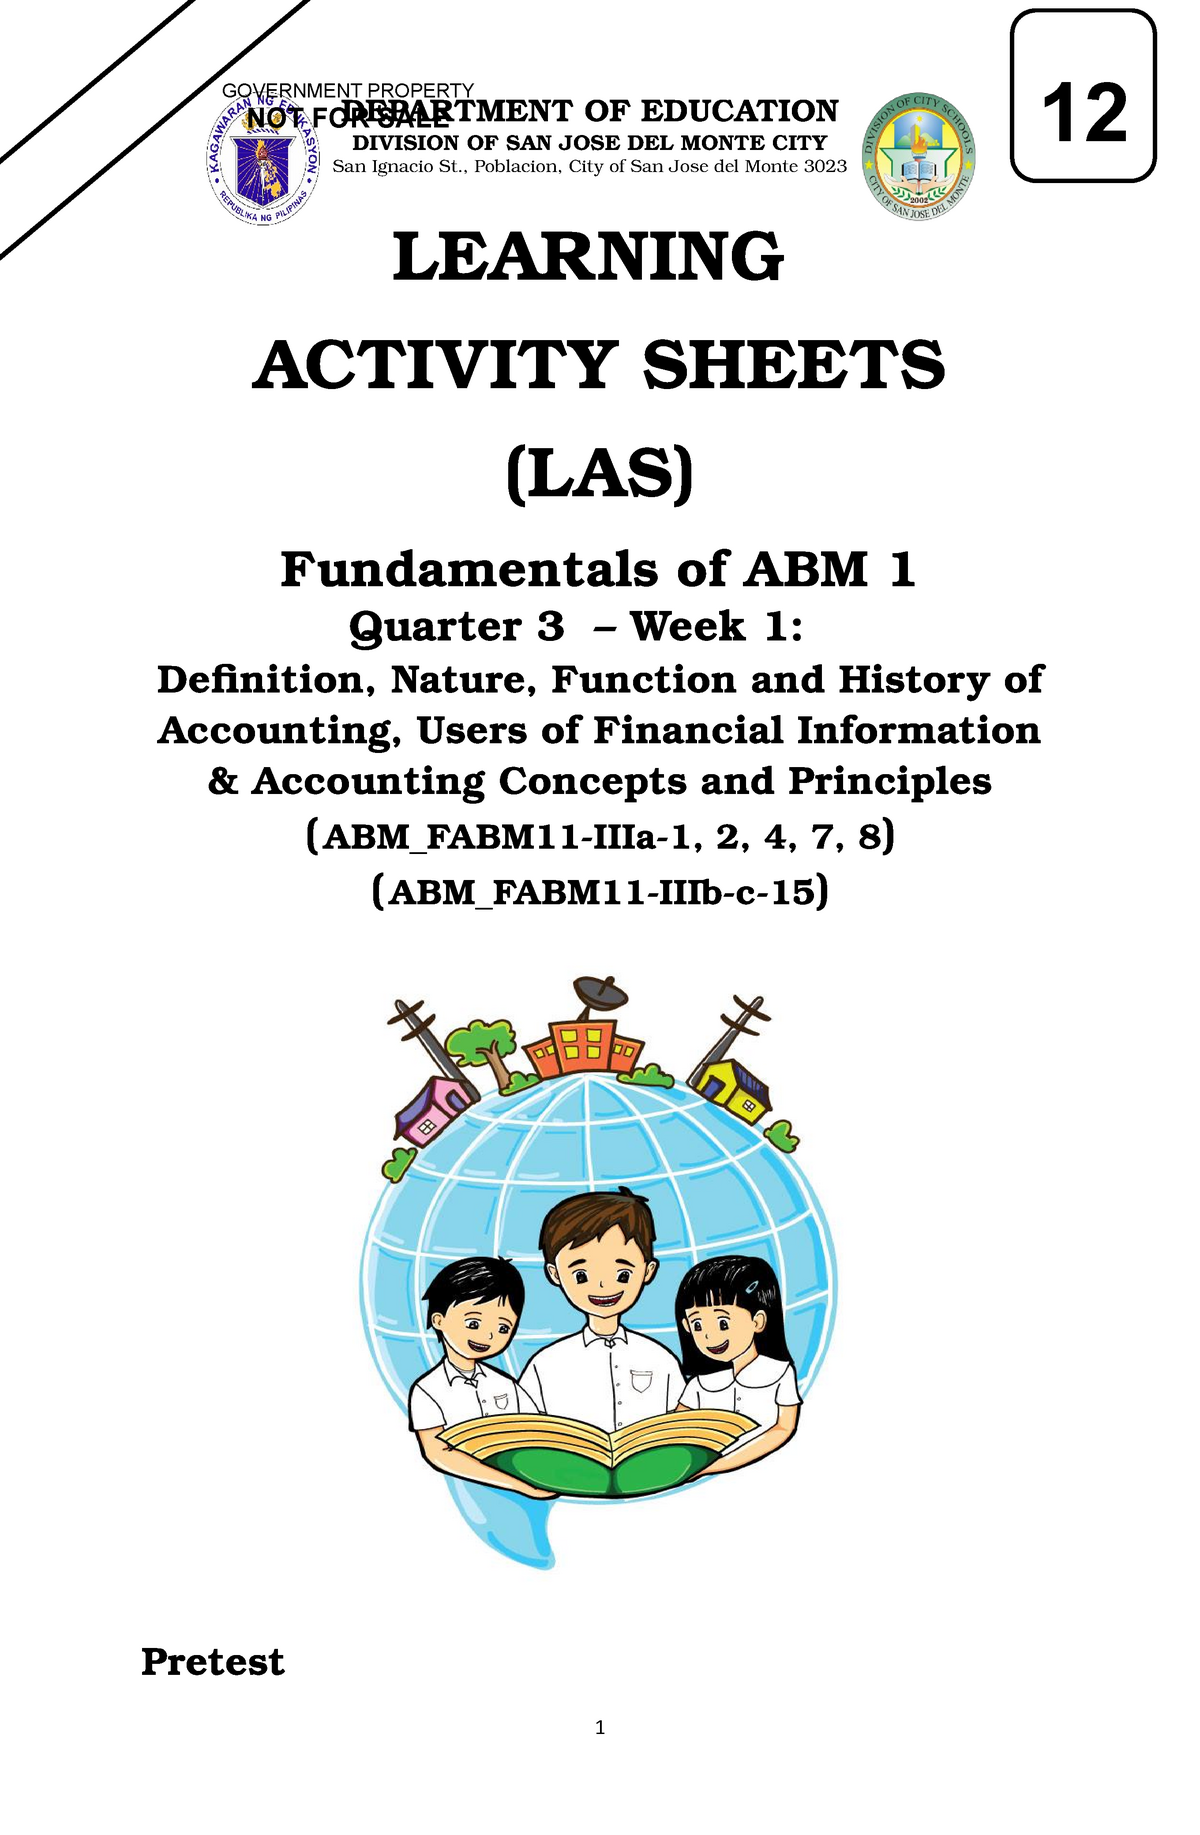 Learning Activity Sheet Fundamentals Of Abm 1 Learning Activity